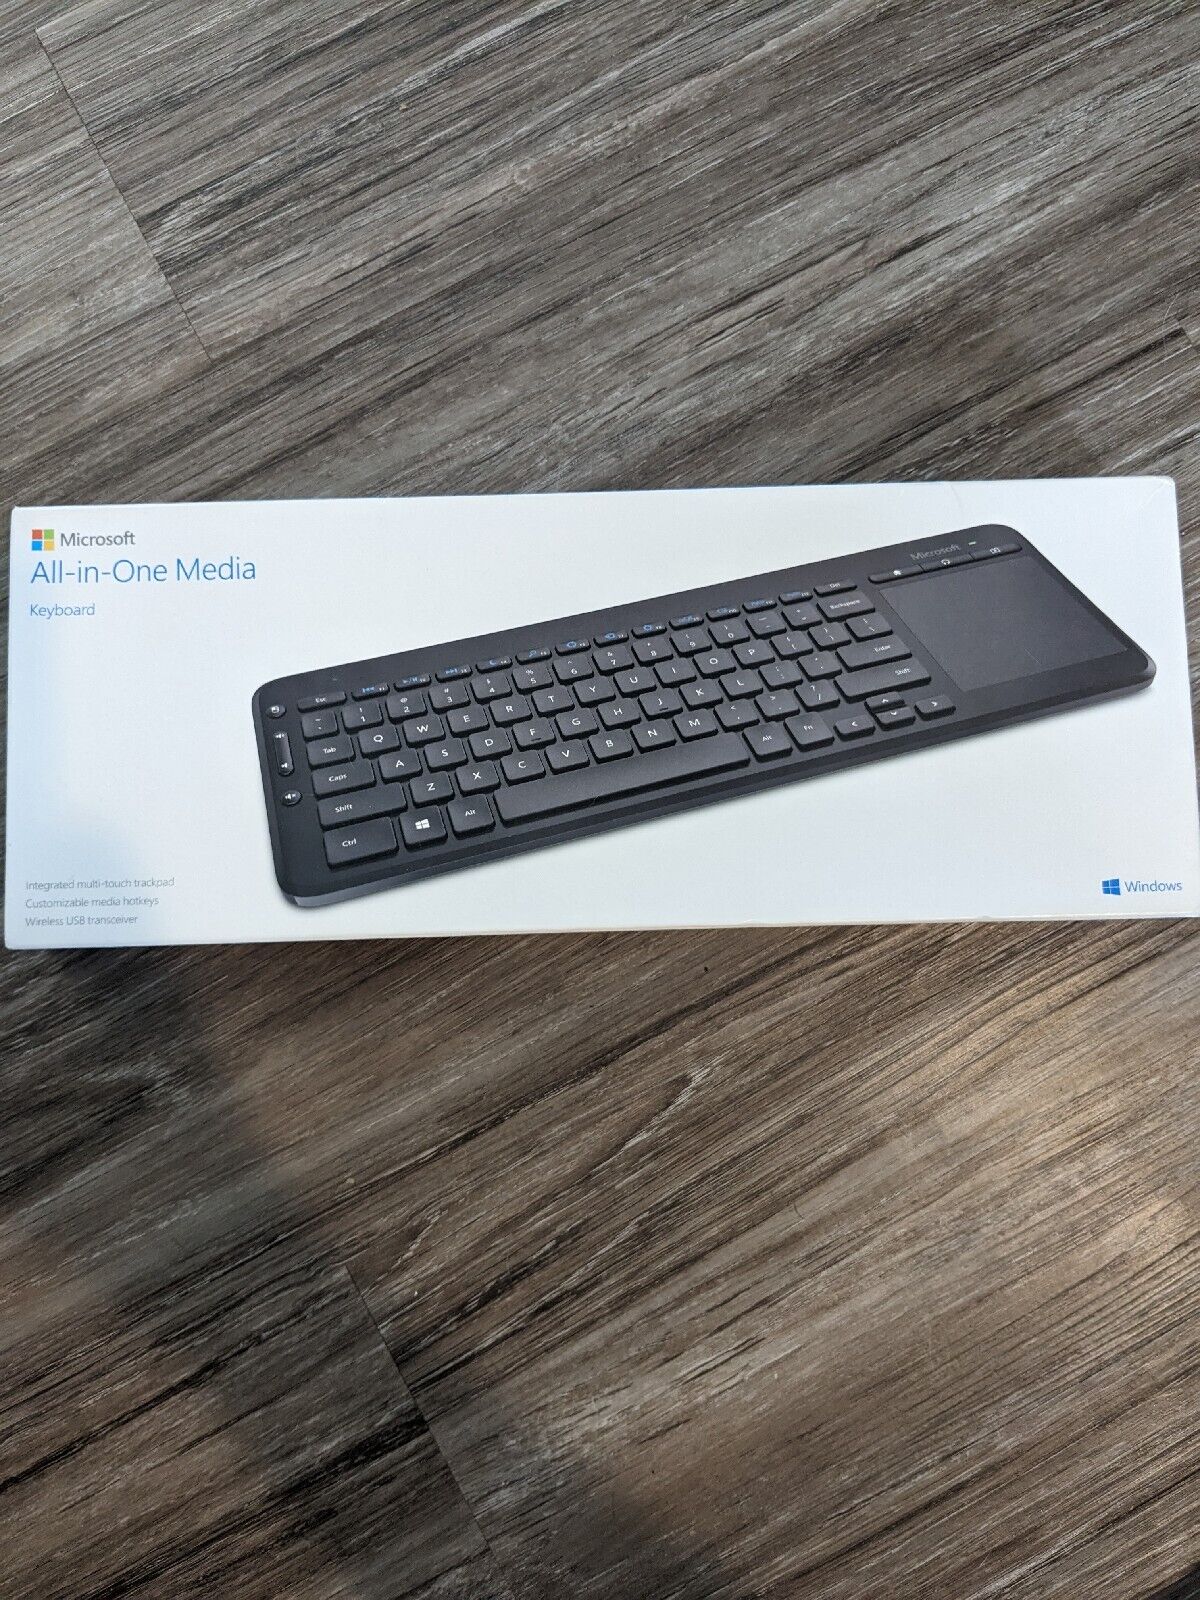 Keyboard New And Sealed Microsoft All-in-One Media